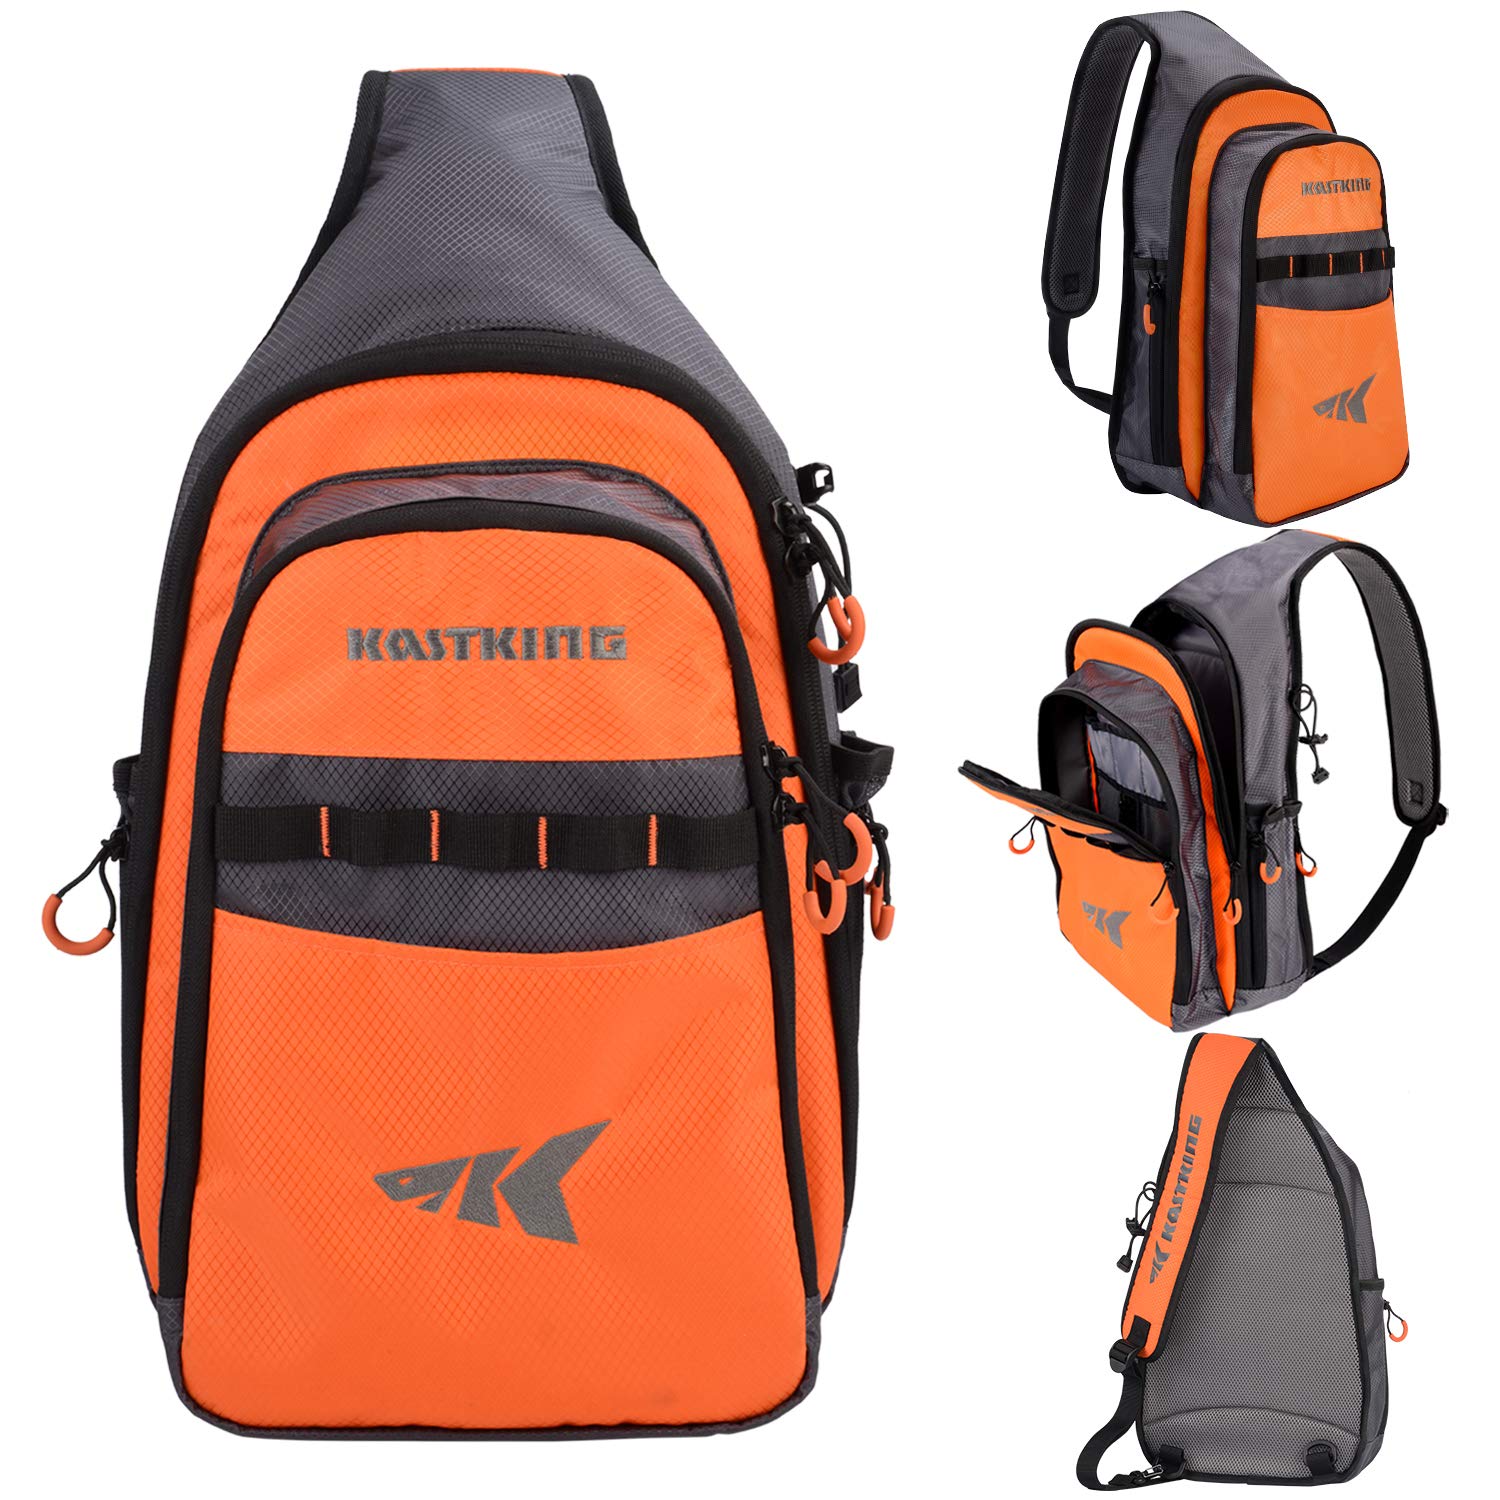 Buy CALANDIS® Running Waist Pack Portable Accs Lure Fishing Bag for Hiking  Camping Cycling Orange